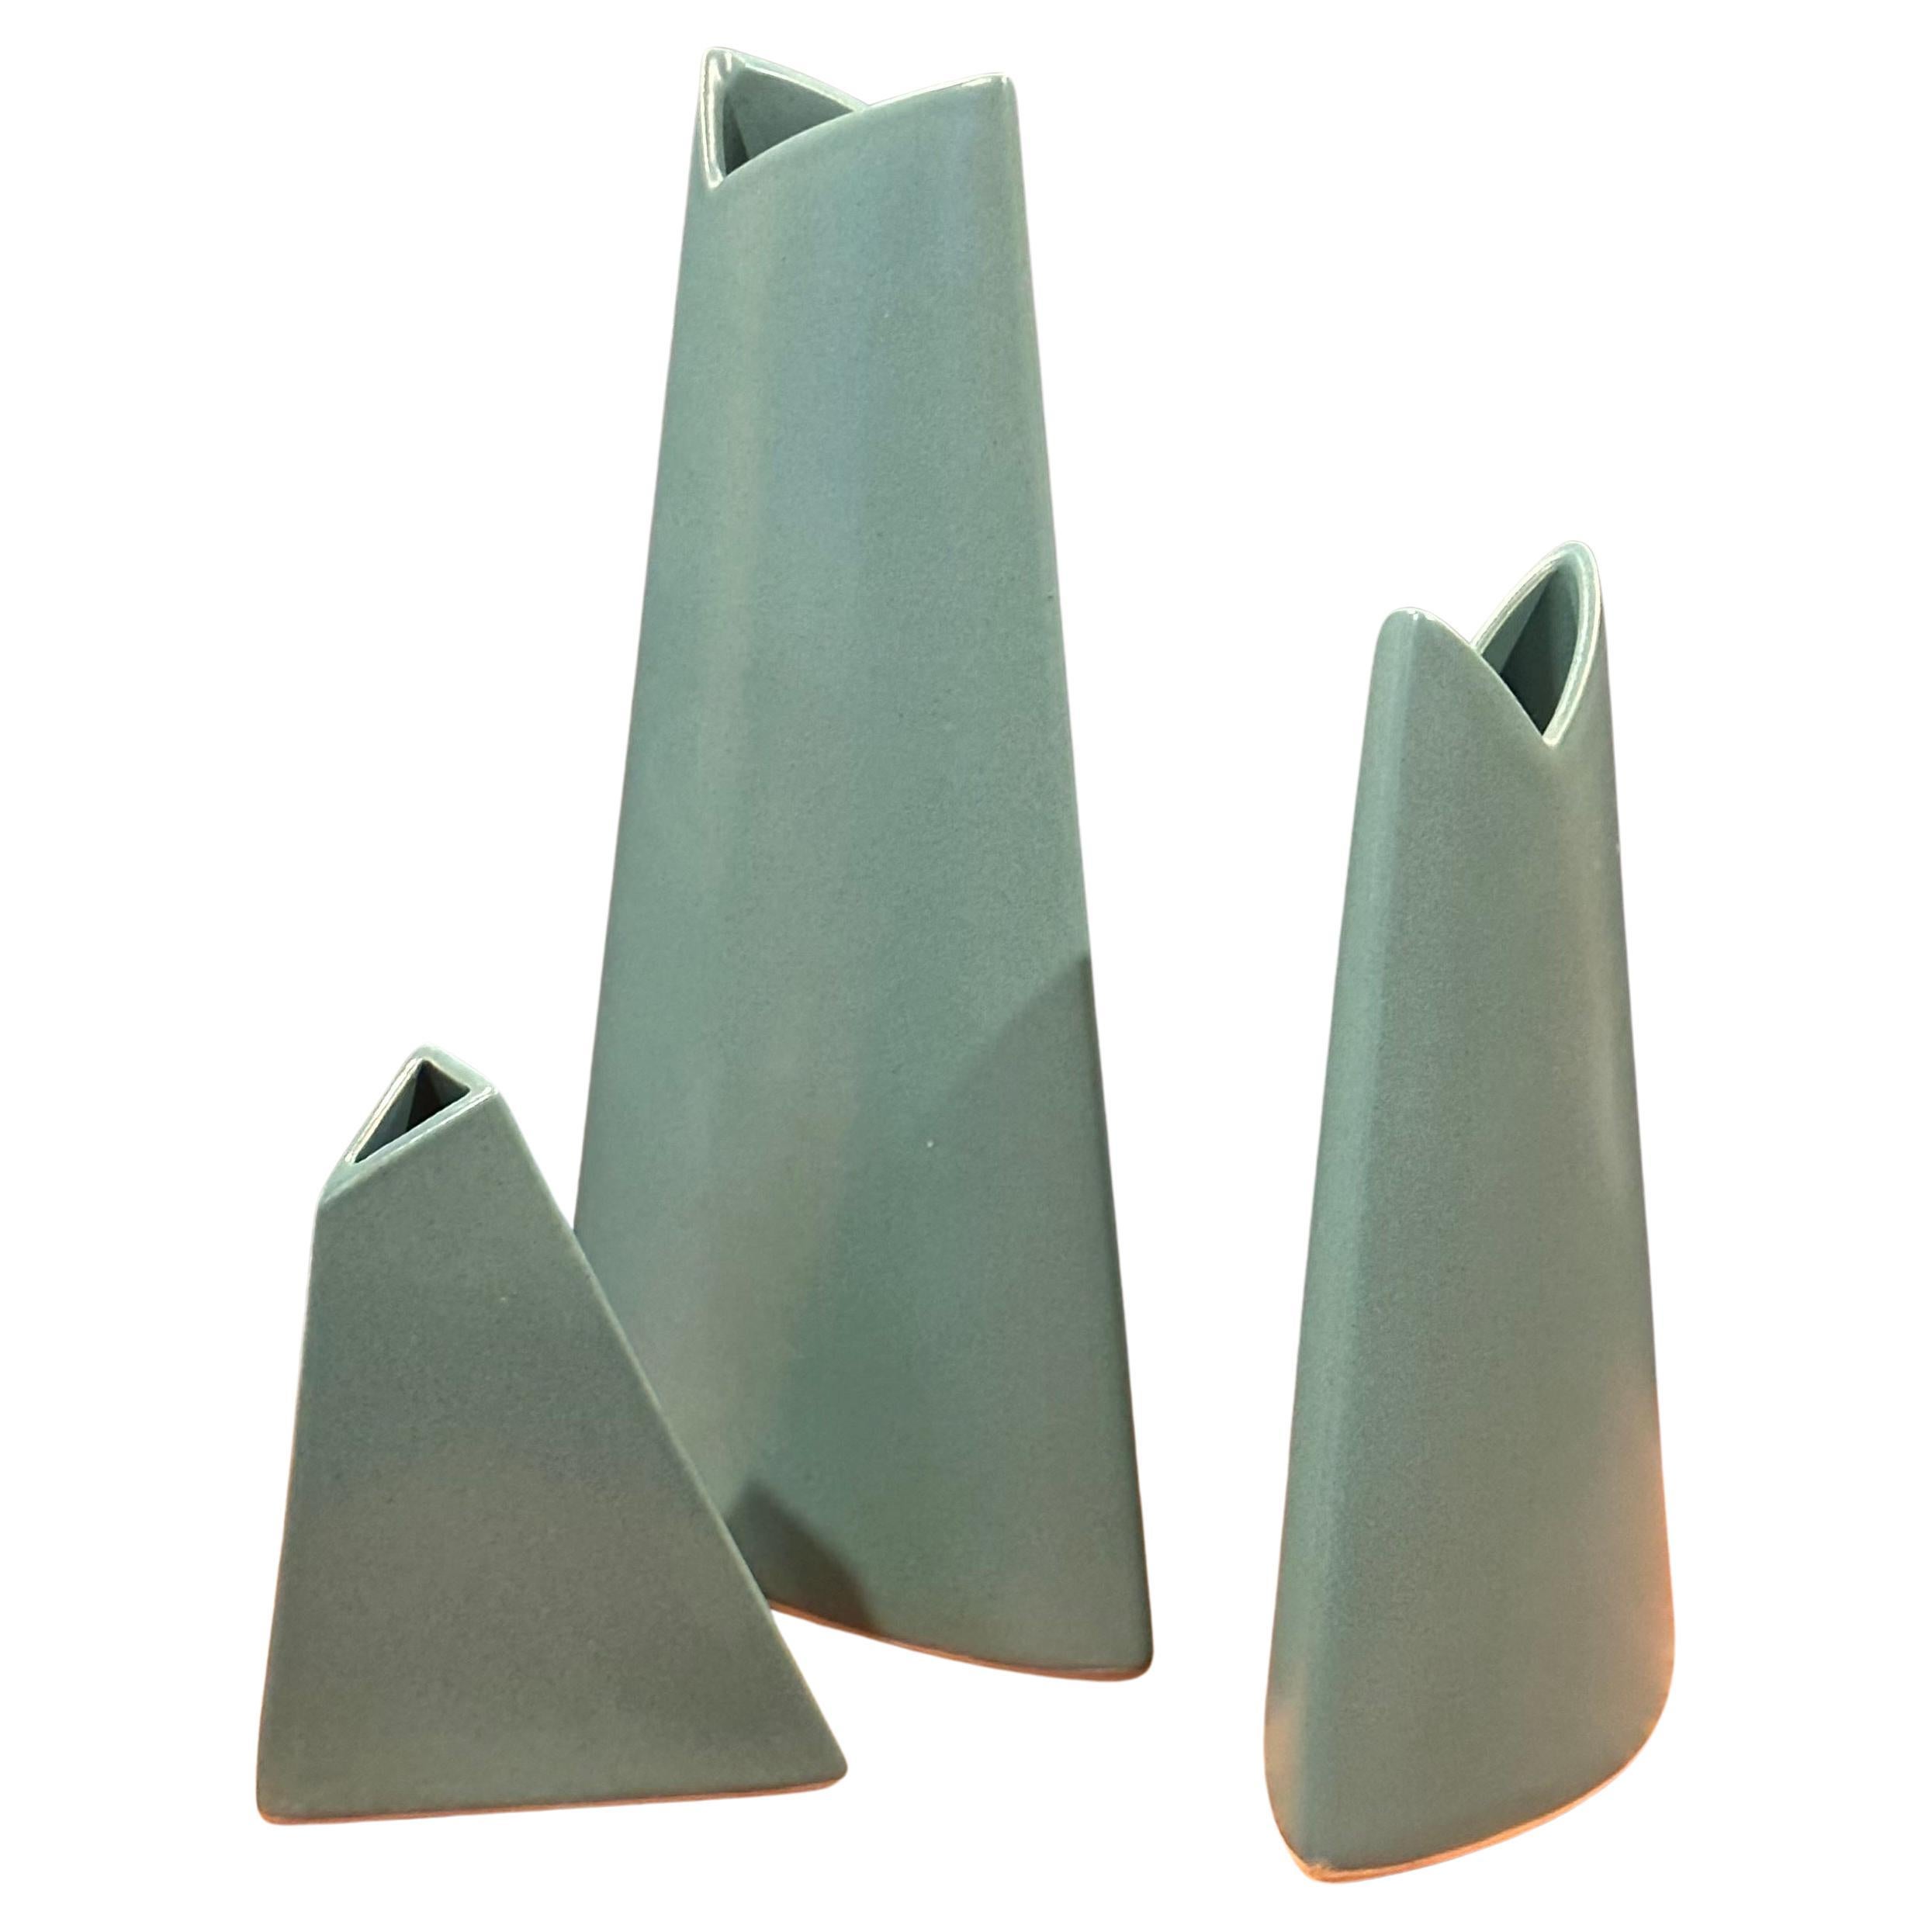 American Set of Three Post-Modern Geometric Ceramic Vases by James Johnston For Sale